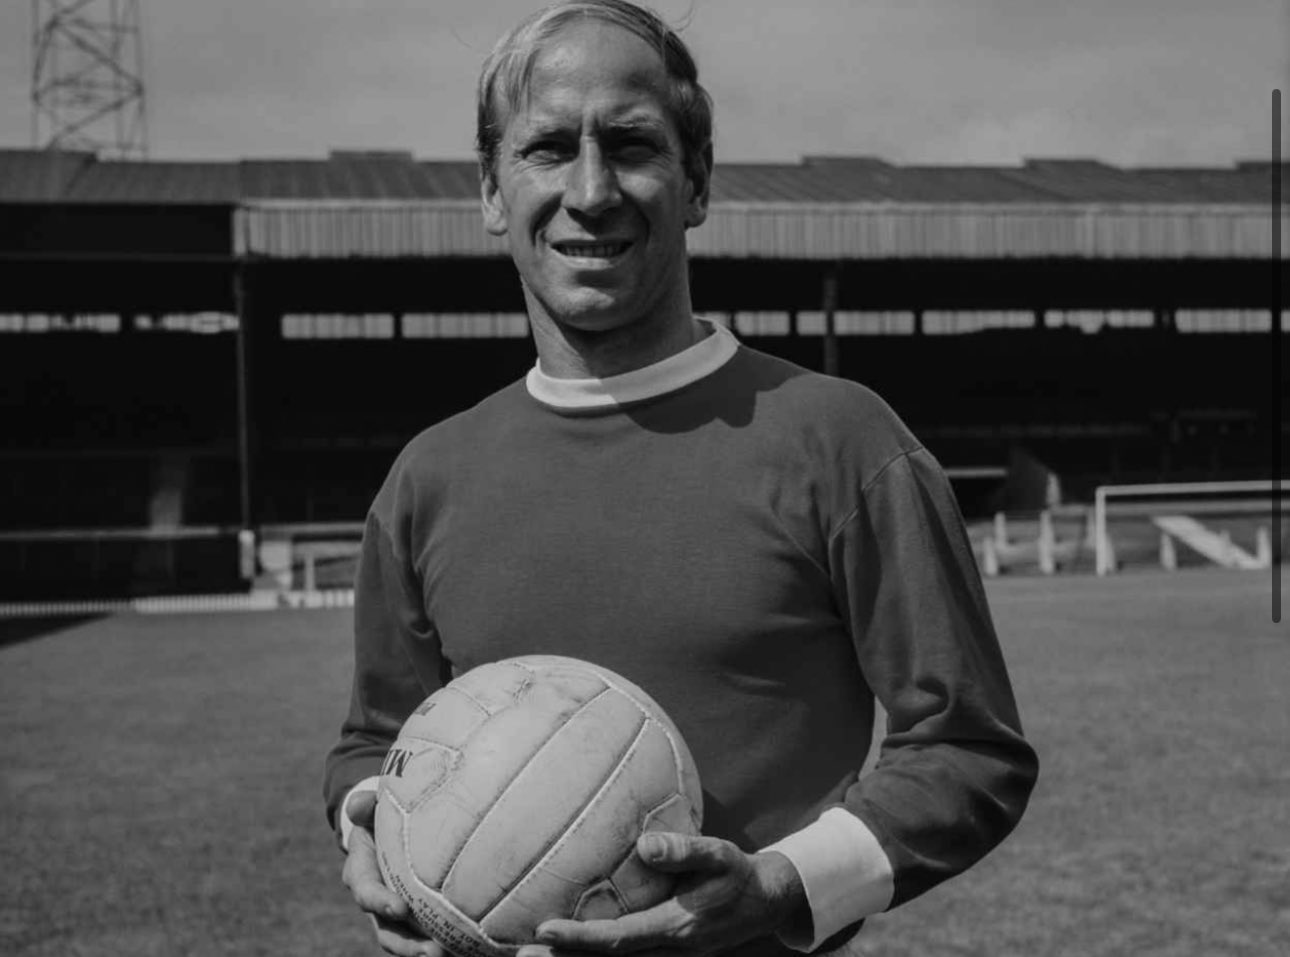 Fallece Bobby Charlton, leyenda del fútbol inglés